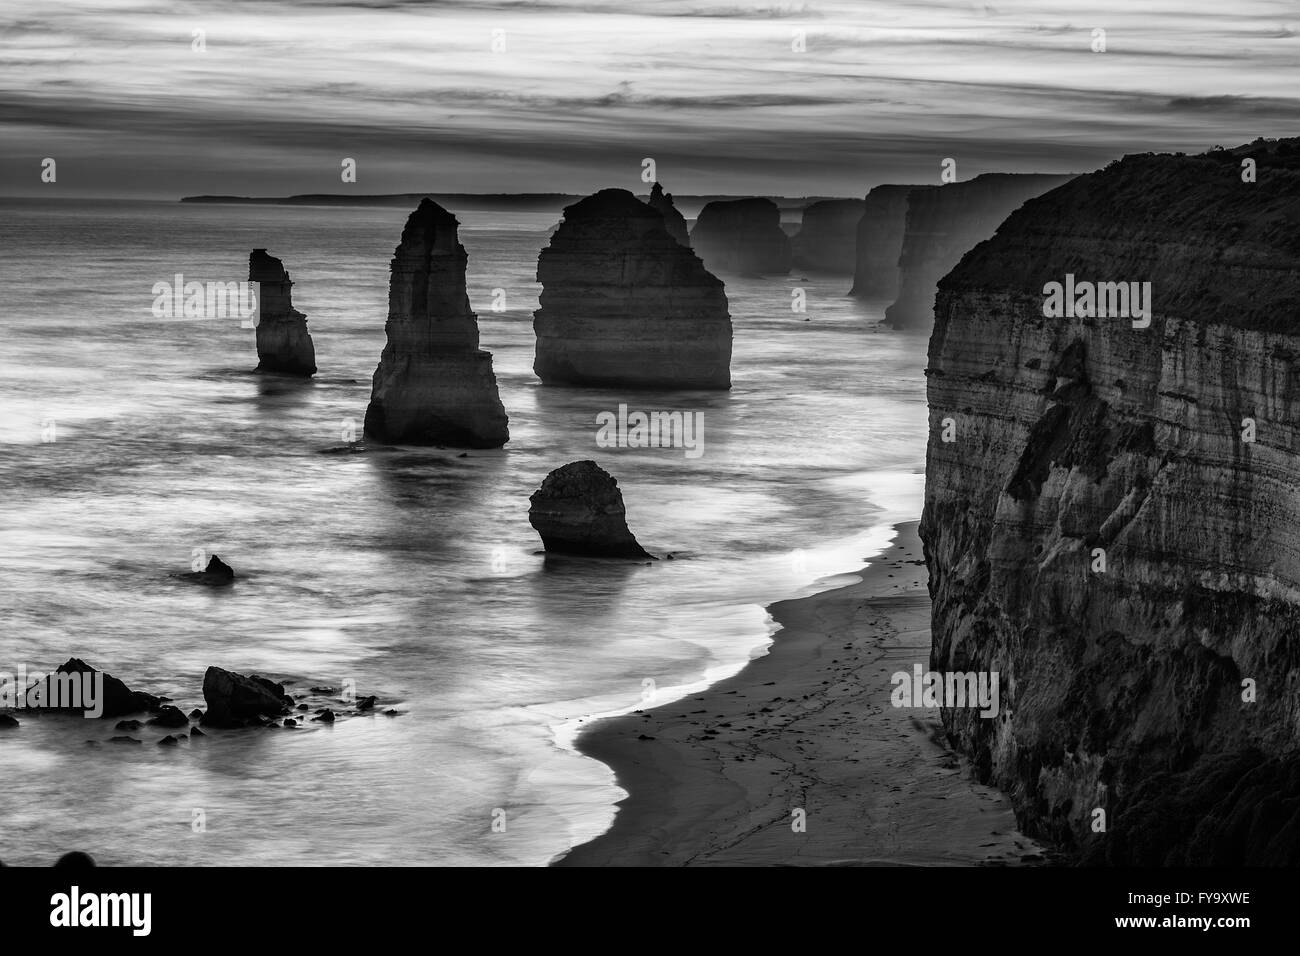 Twelve Apostles rock formations, Great Ocean Road, Victoria, Australia. Black and white image. Stock Photo